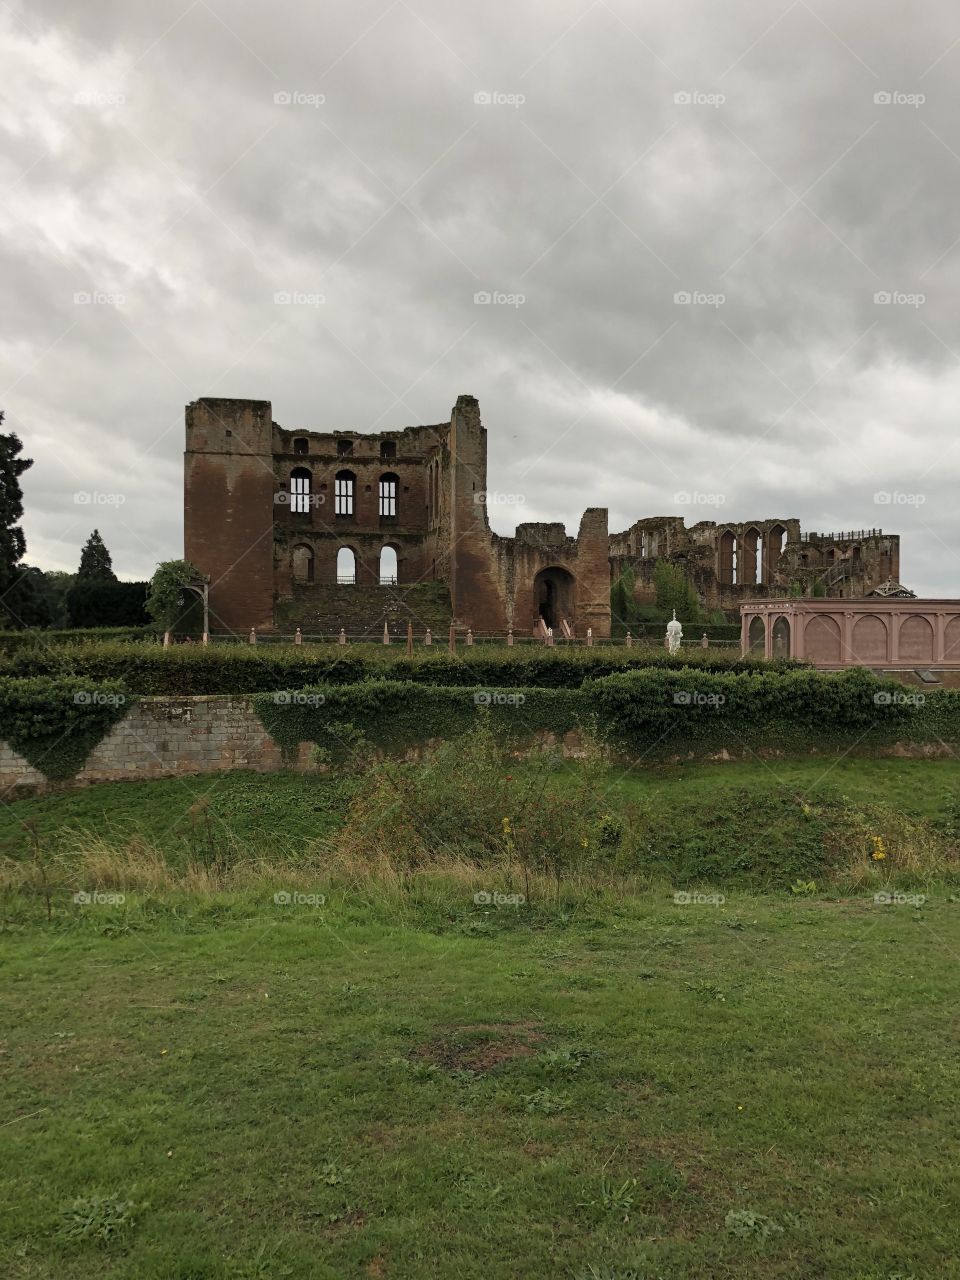 The gloomy Kenilworth Castle